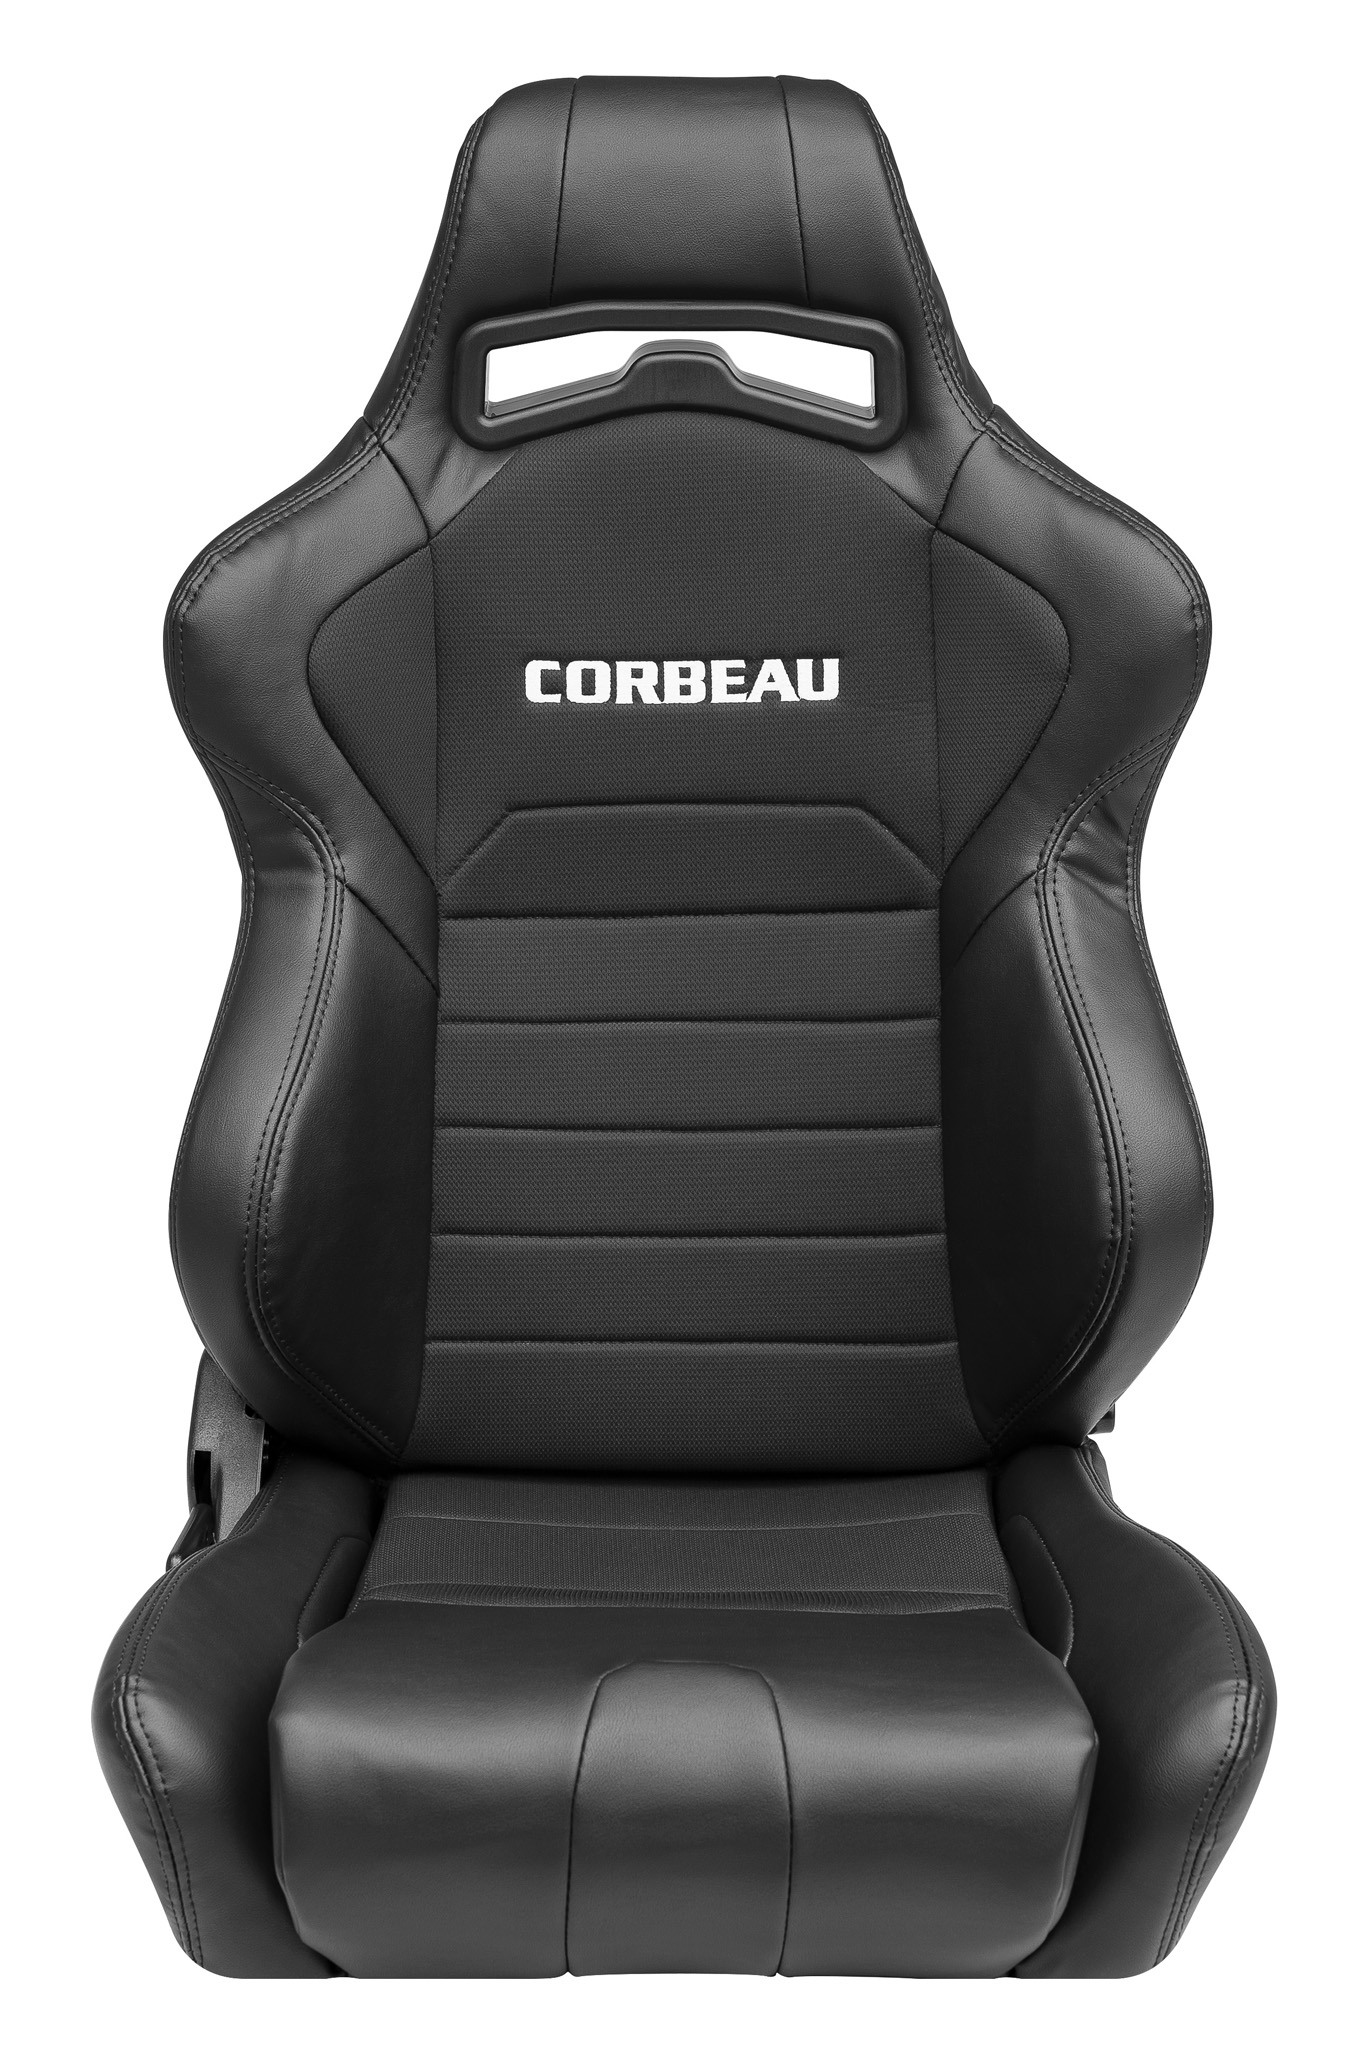 Corbeau - 44001B - Black 4-Point Bolt-In